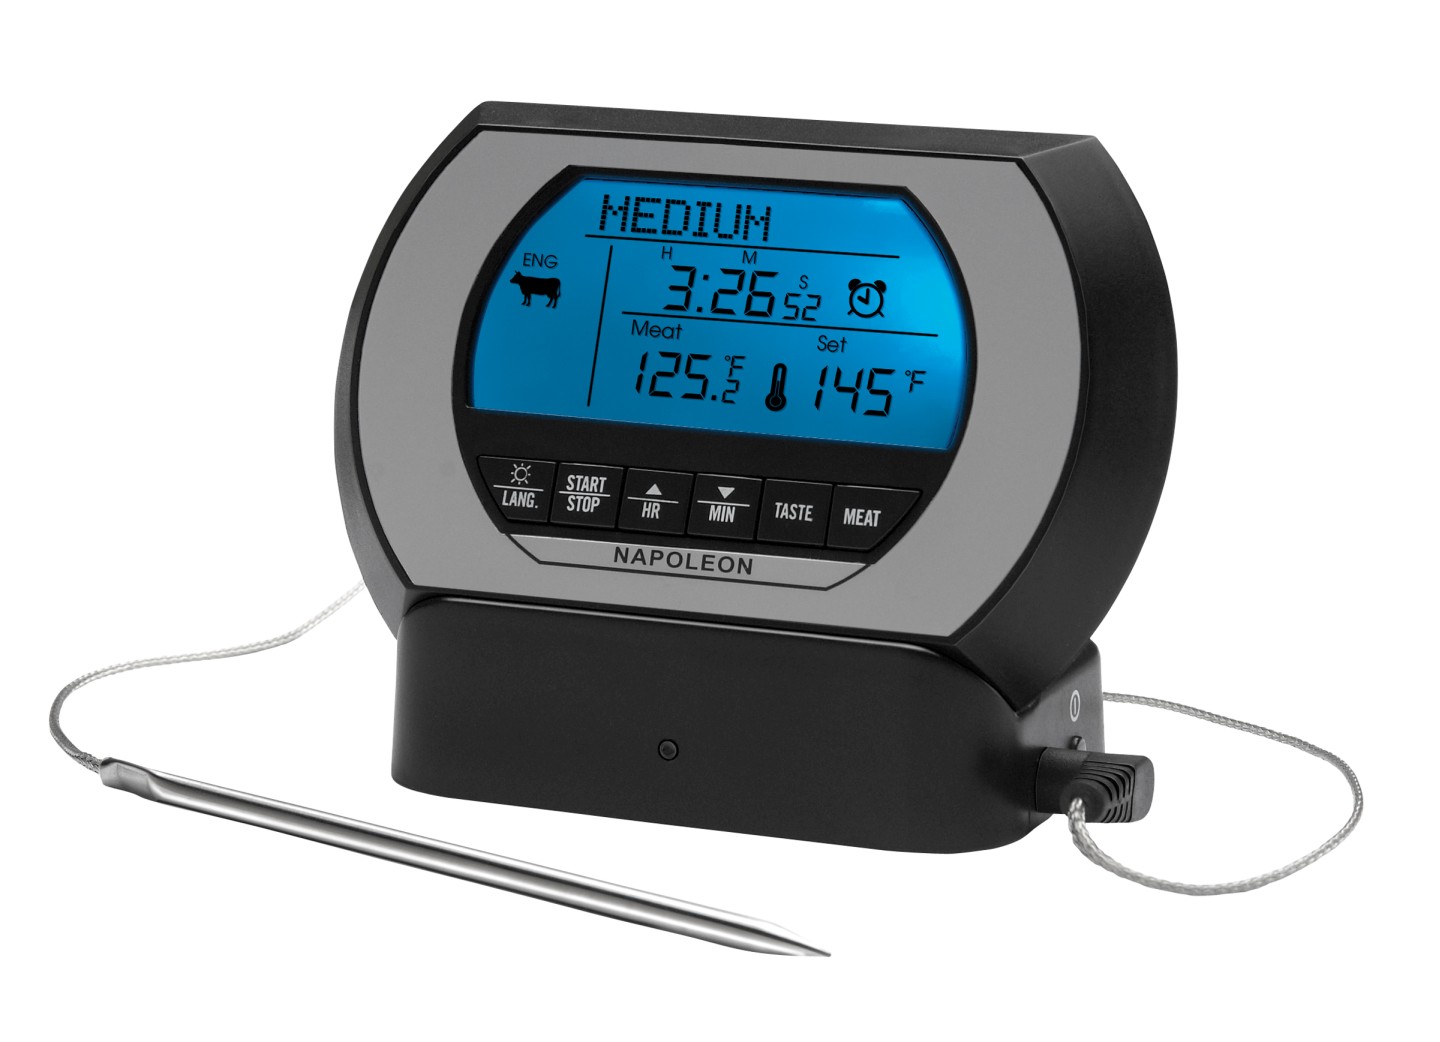 Napoleon PRO Digital Thermometer wireless